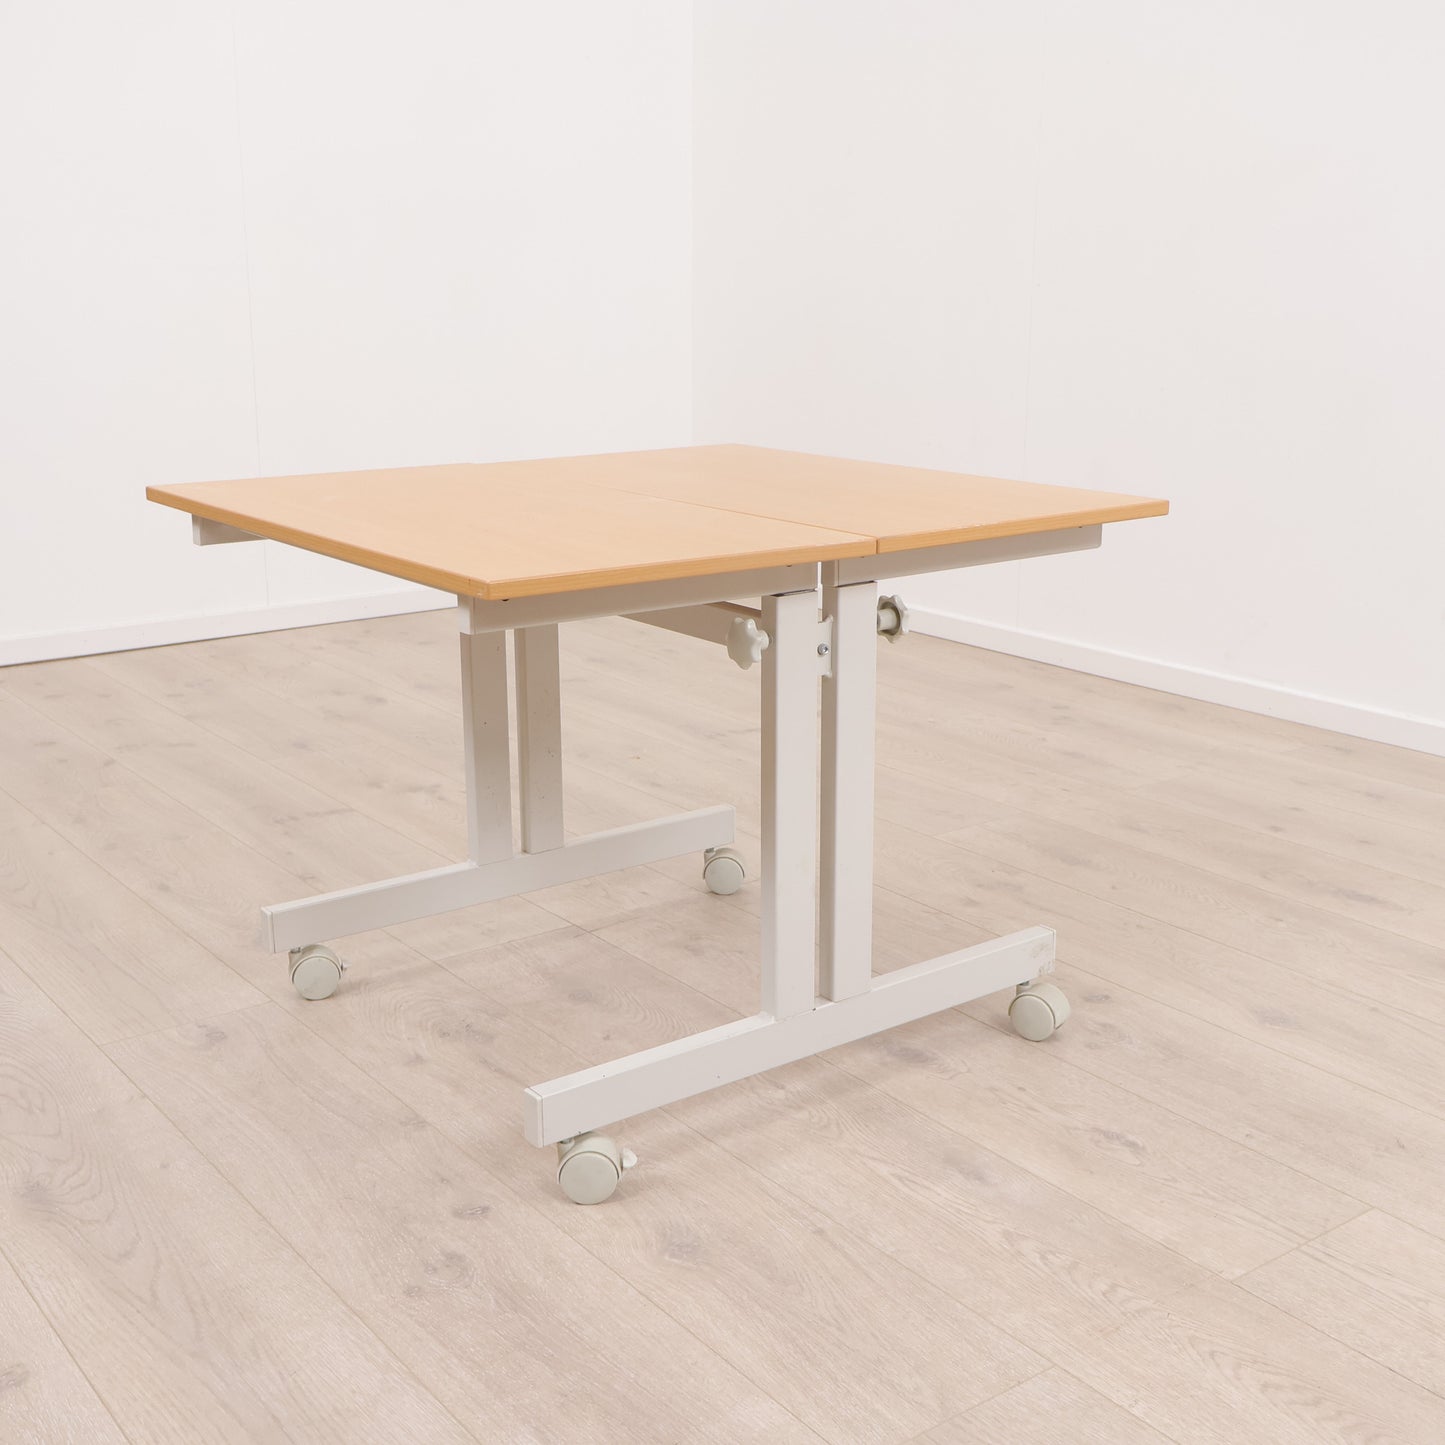 Kvalitetssikret | Mindre skrivebord med hjul, 75x80